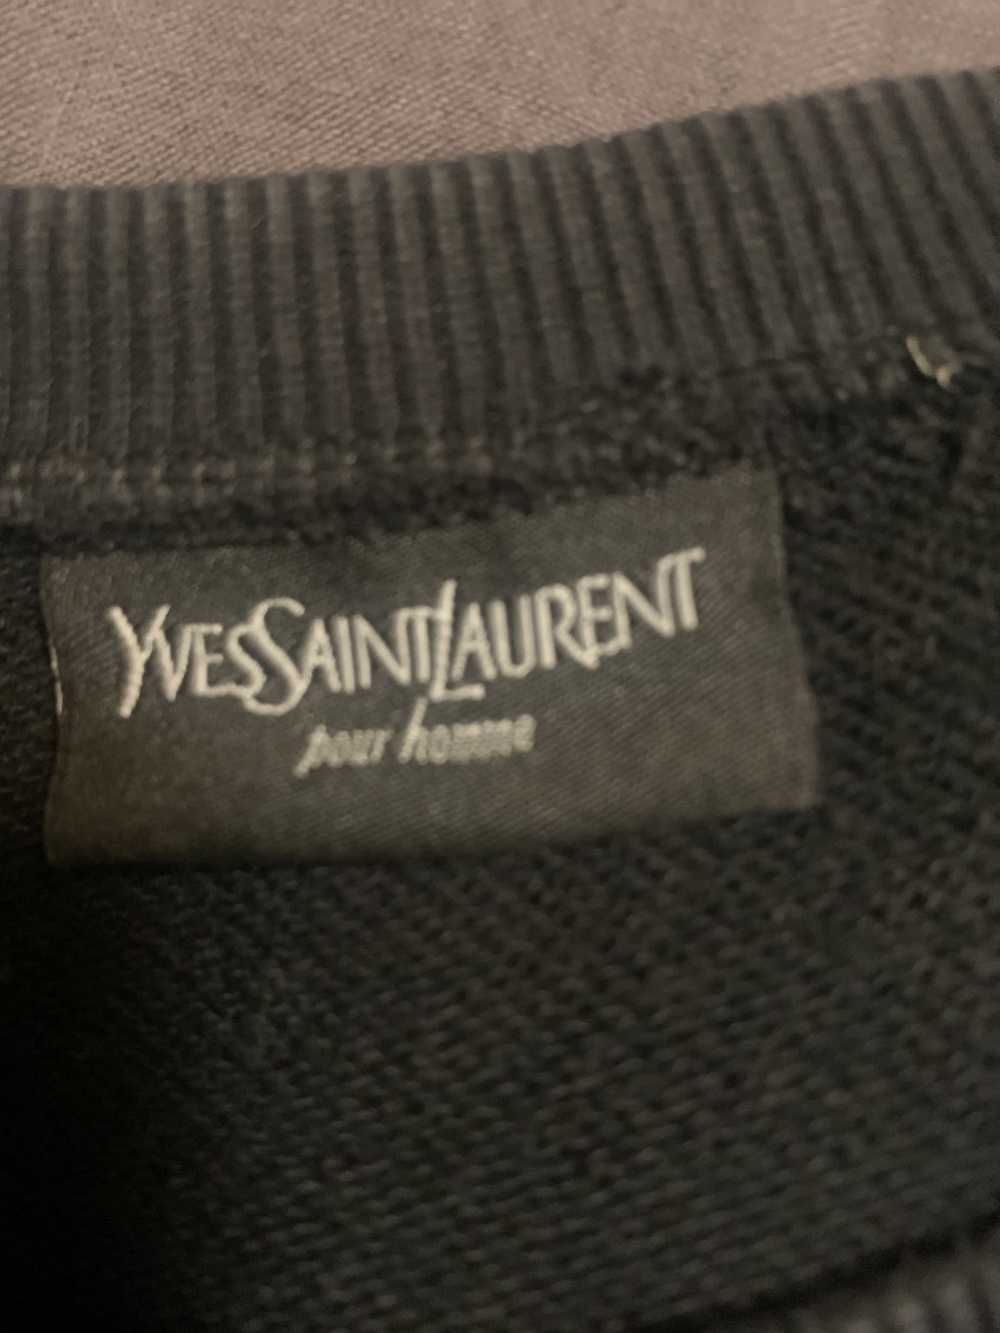 Yves Saint Laurent Yves Saint Laurent - image 2